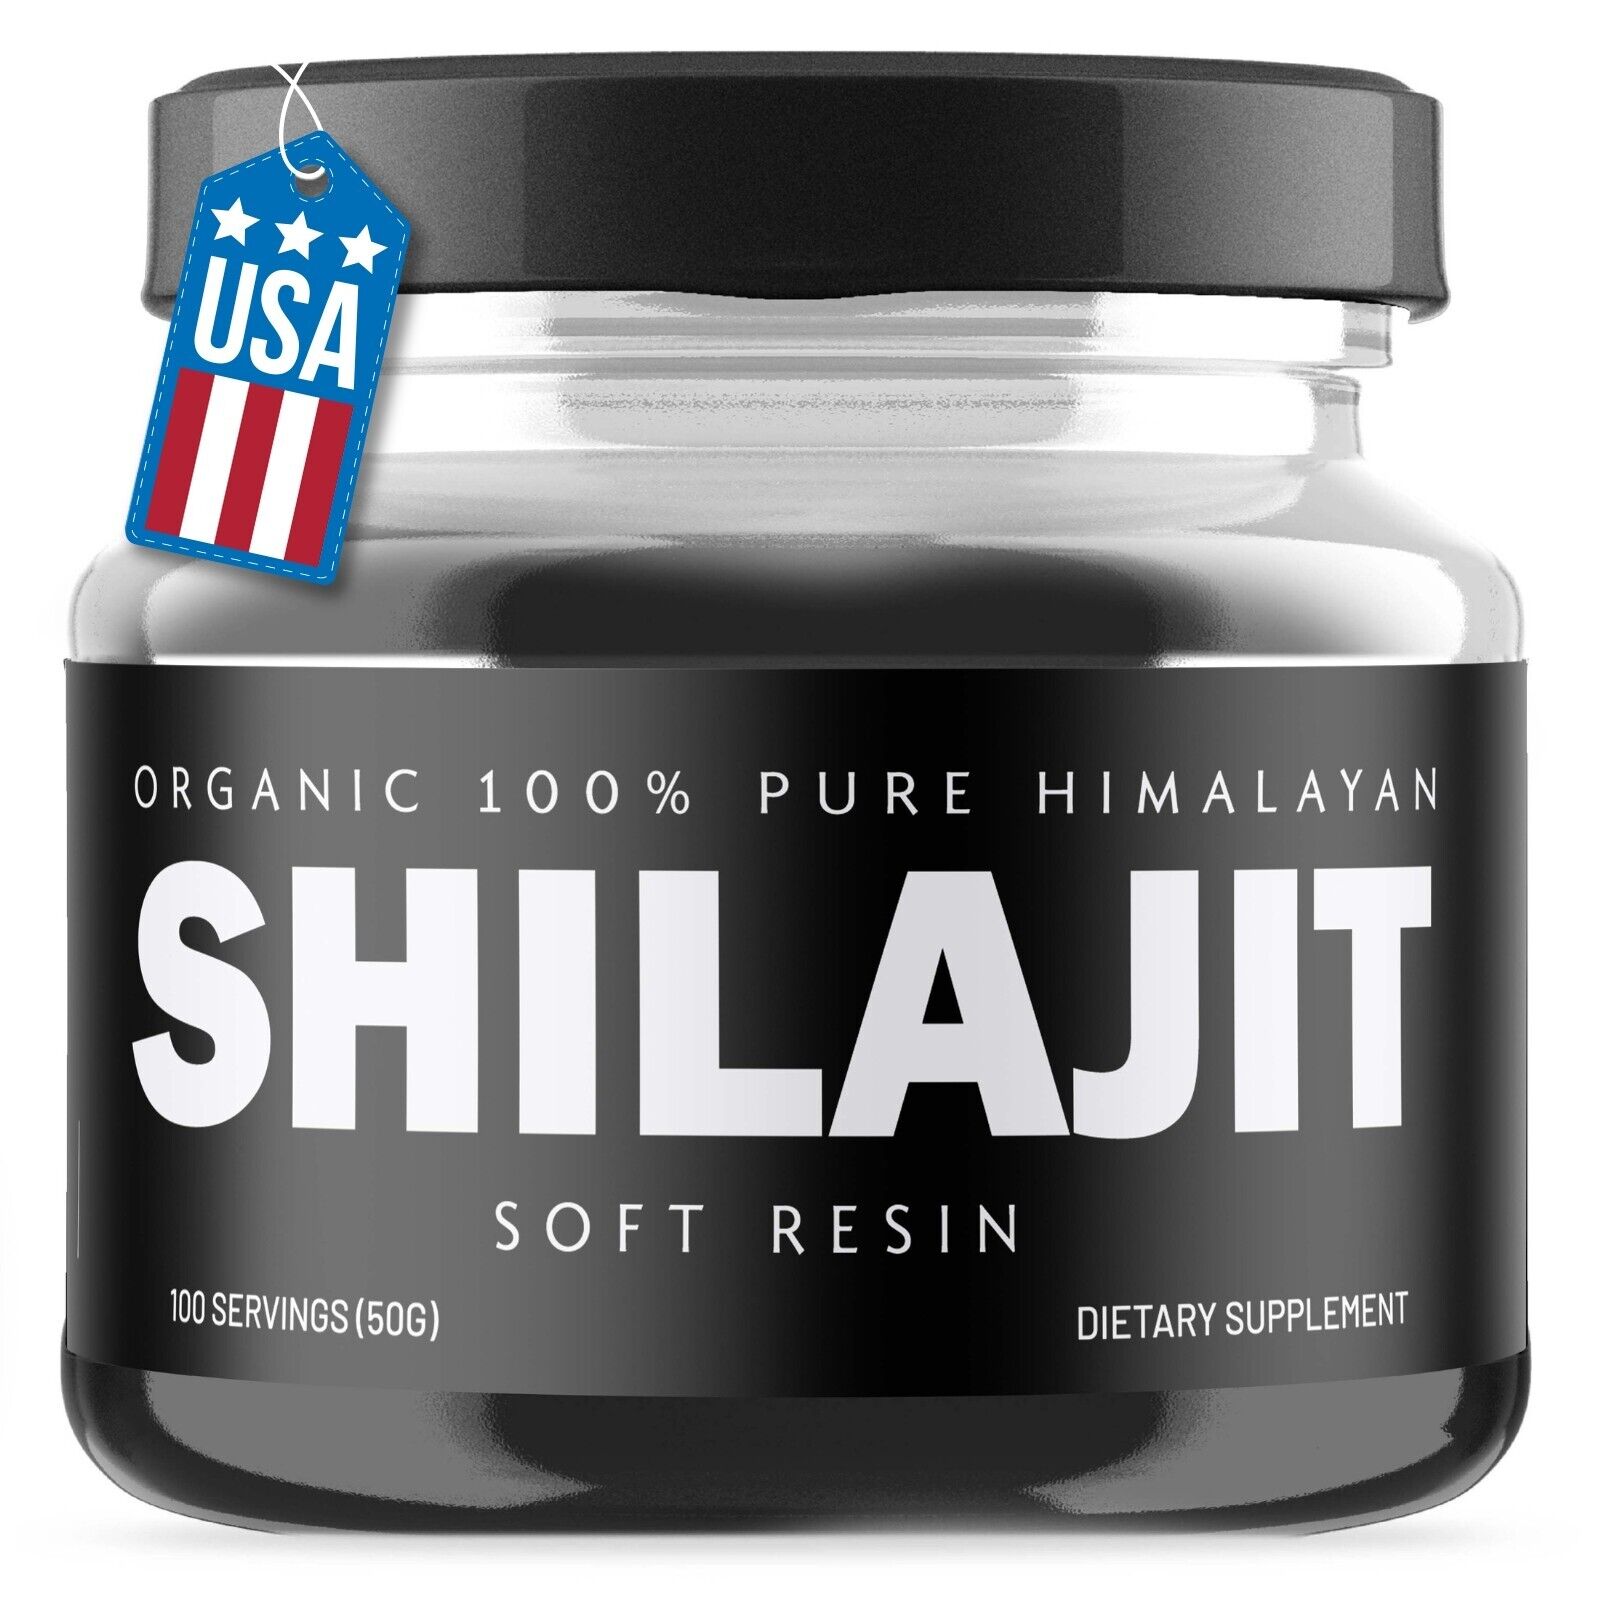 Organic 100% Pure Himalayan Shilajit Soft Resin - 50 GRAMS + Measuring Spoon